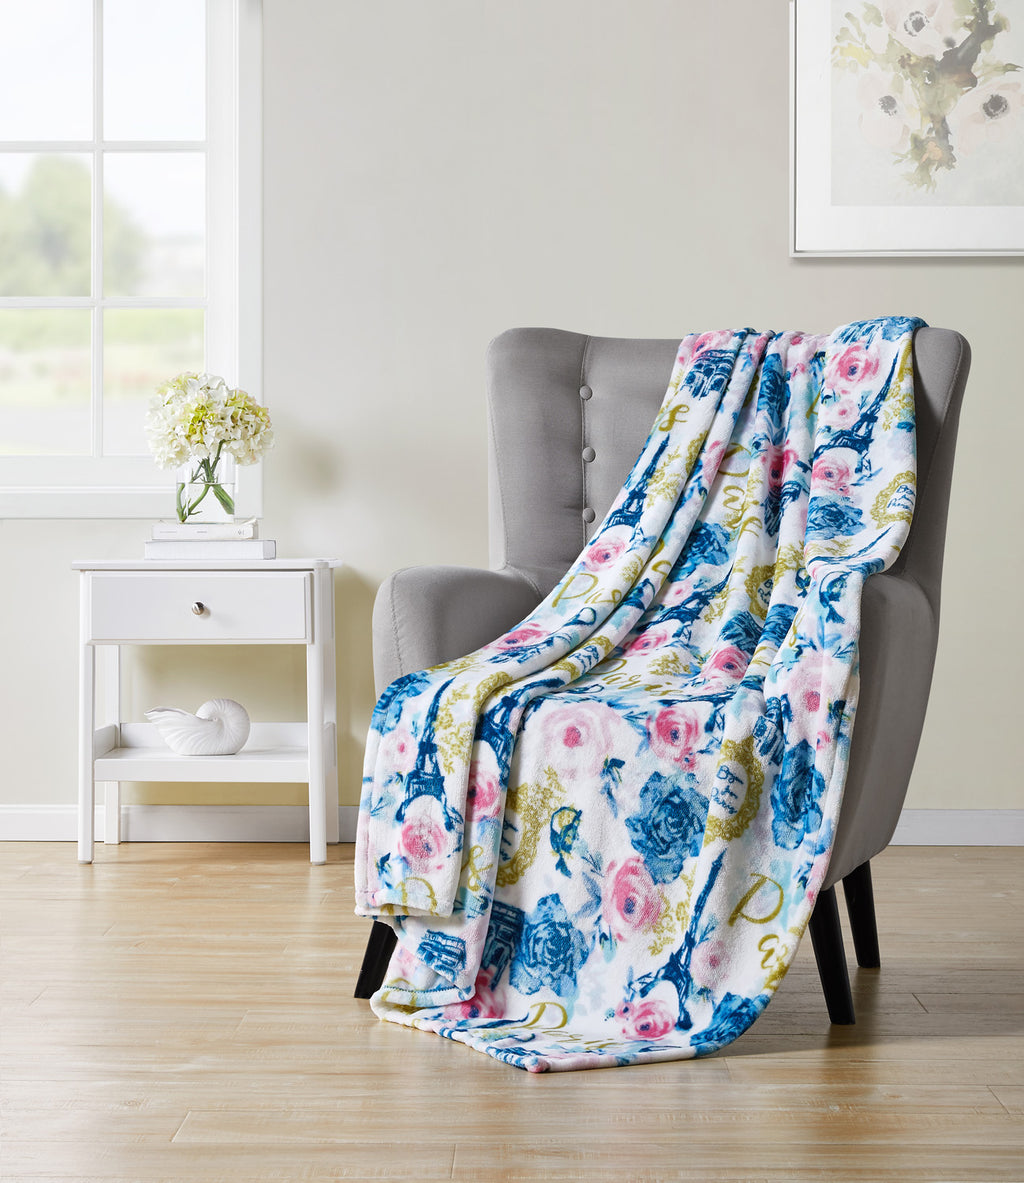 Hudson Essex Spring In Paris Plush Throw Blanket, Multi, 50x70 Inches ...